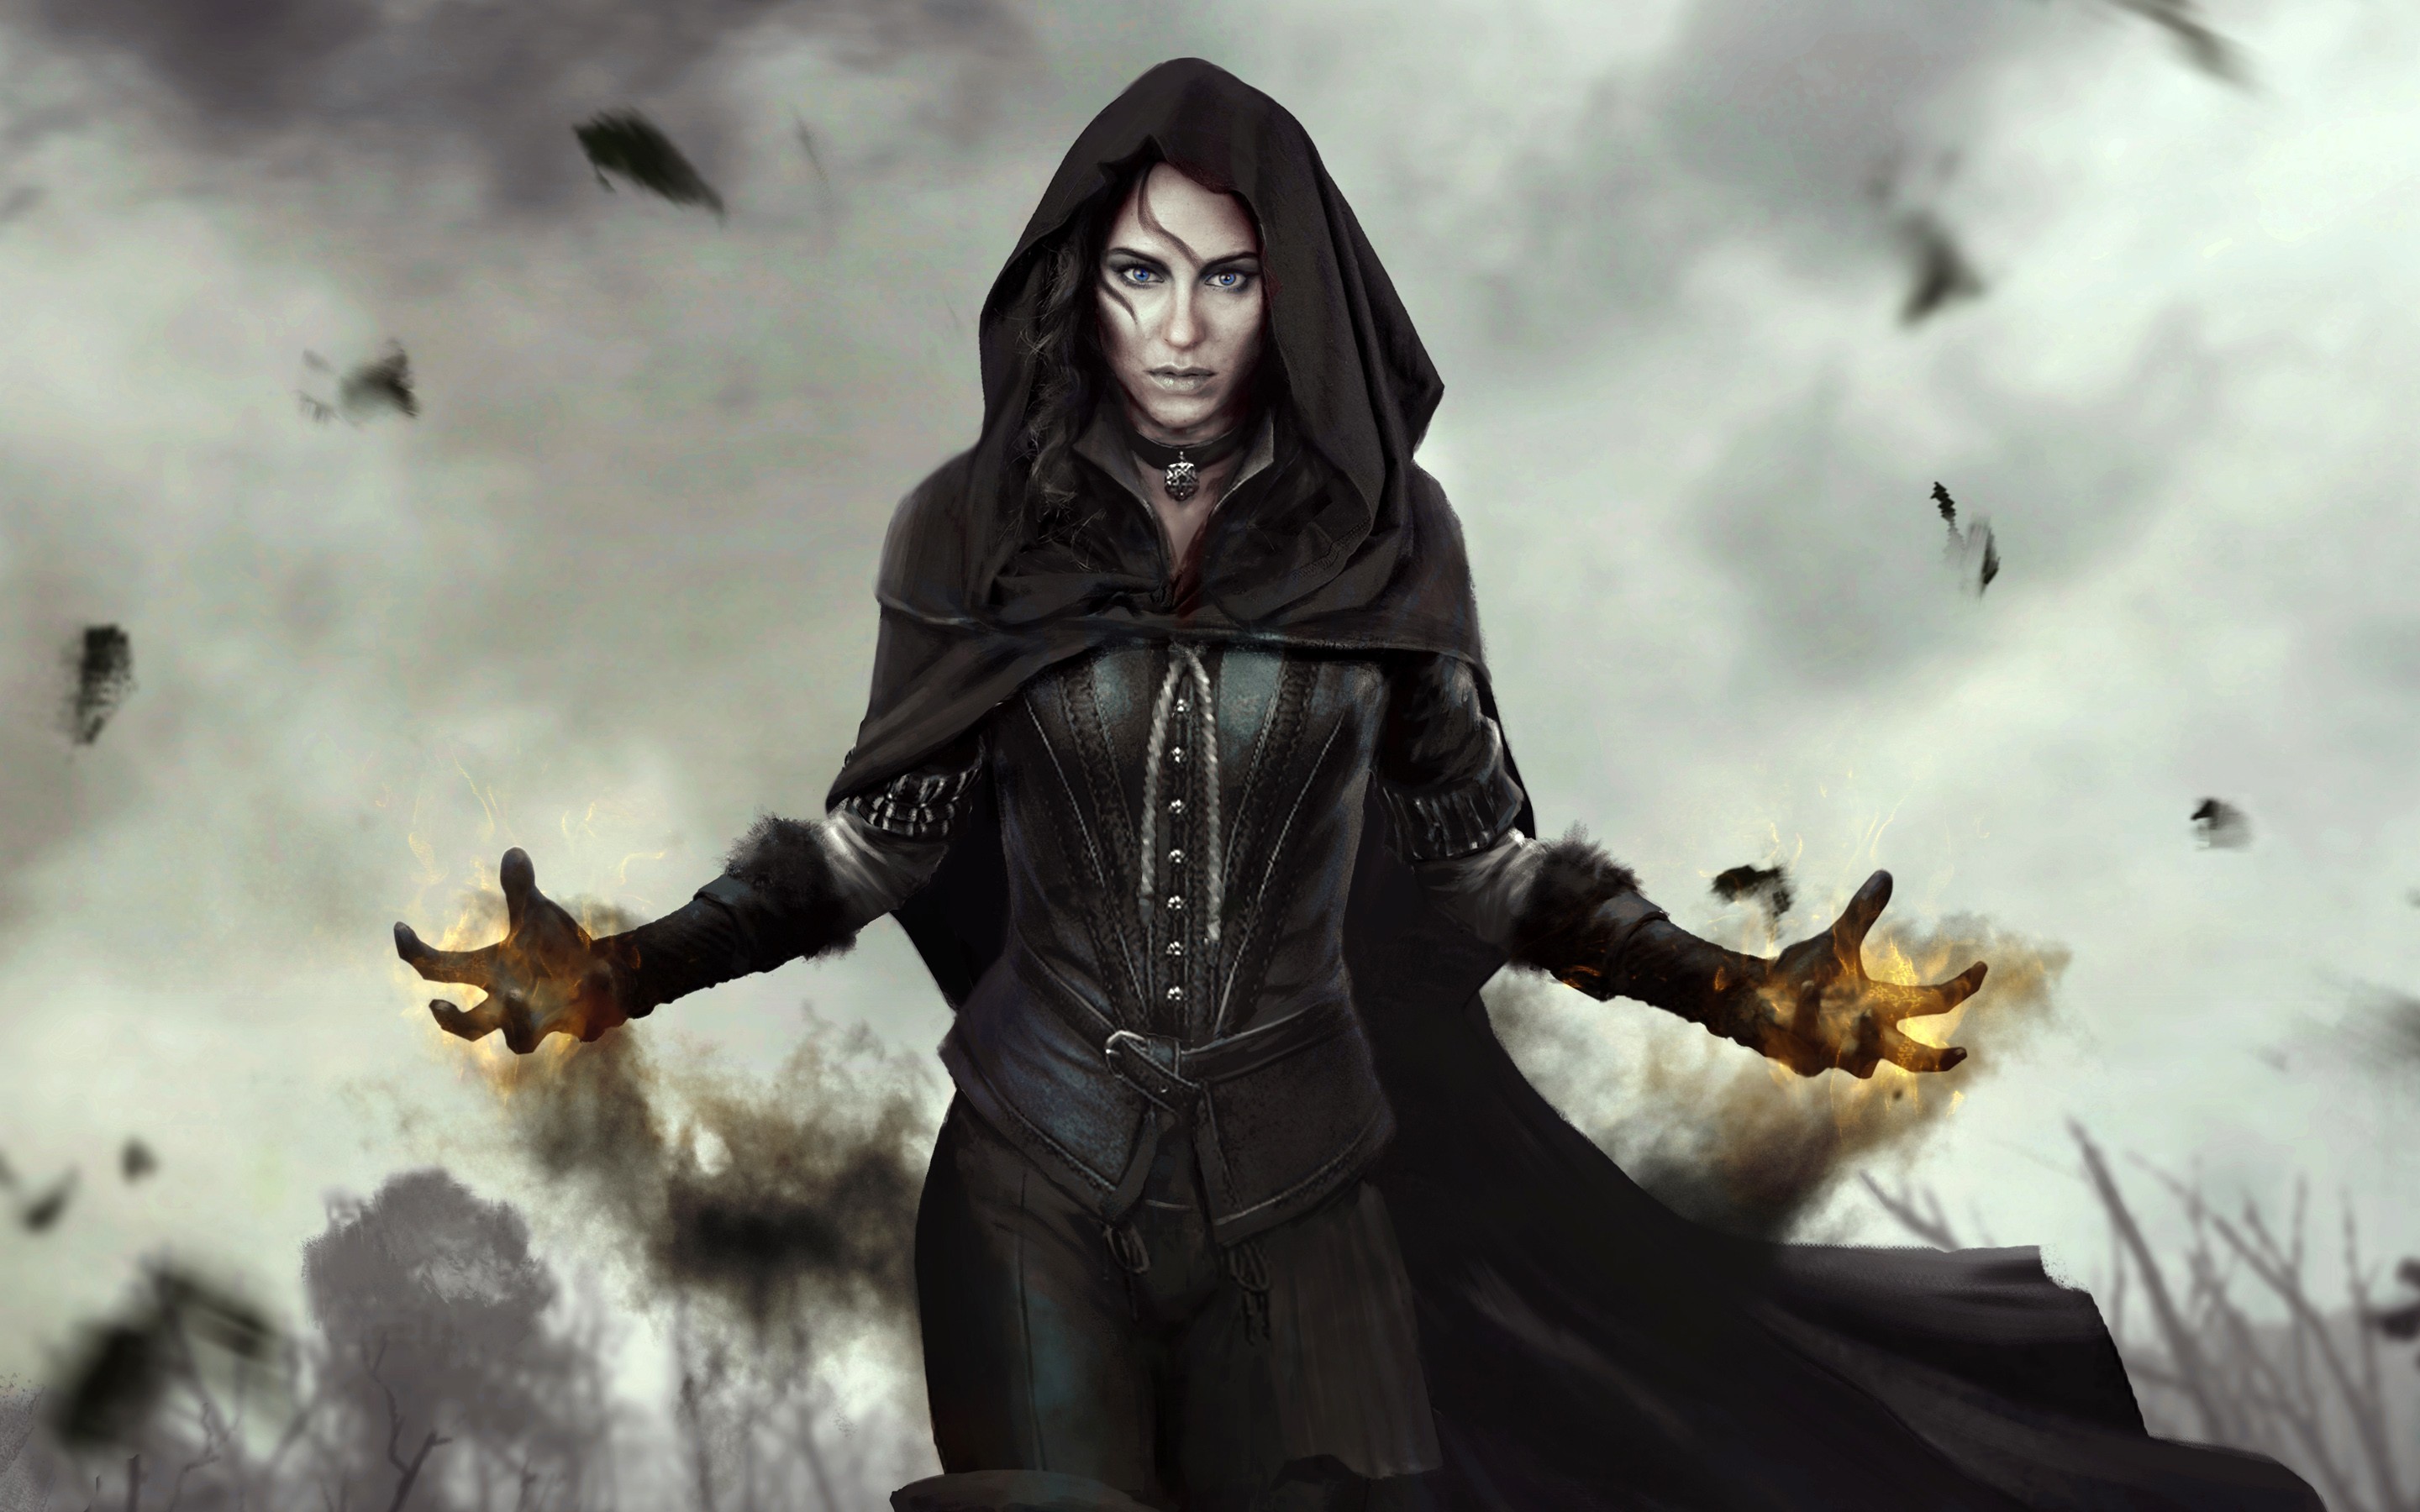 General 2880x1800 The Witcher 3: Wild Hunt Yennefer of Vengerberg video games RPG fantasy art fantasy girl PC gaming video game girls